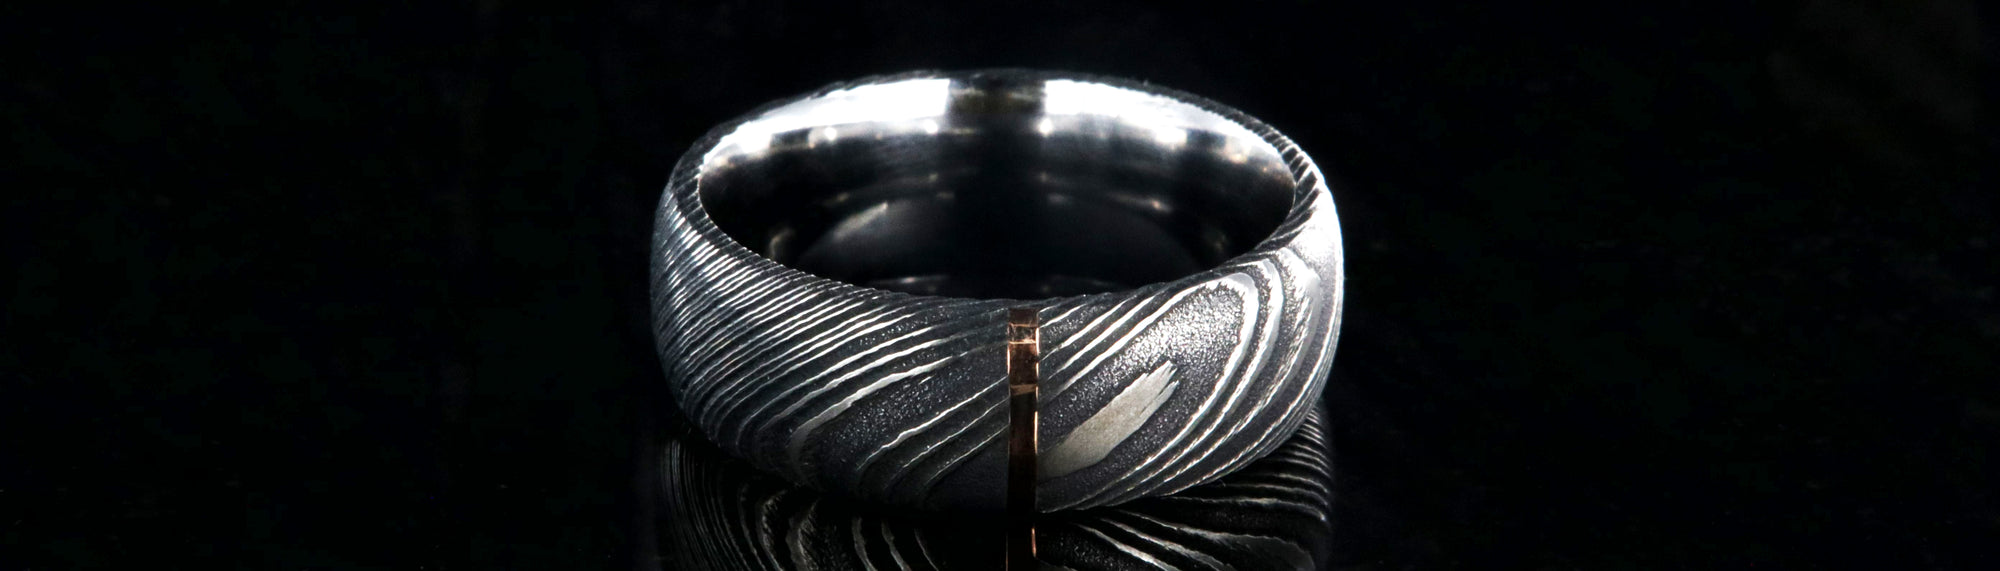 Damascus Steel Rings